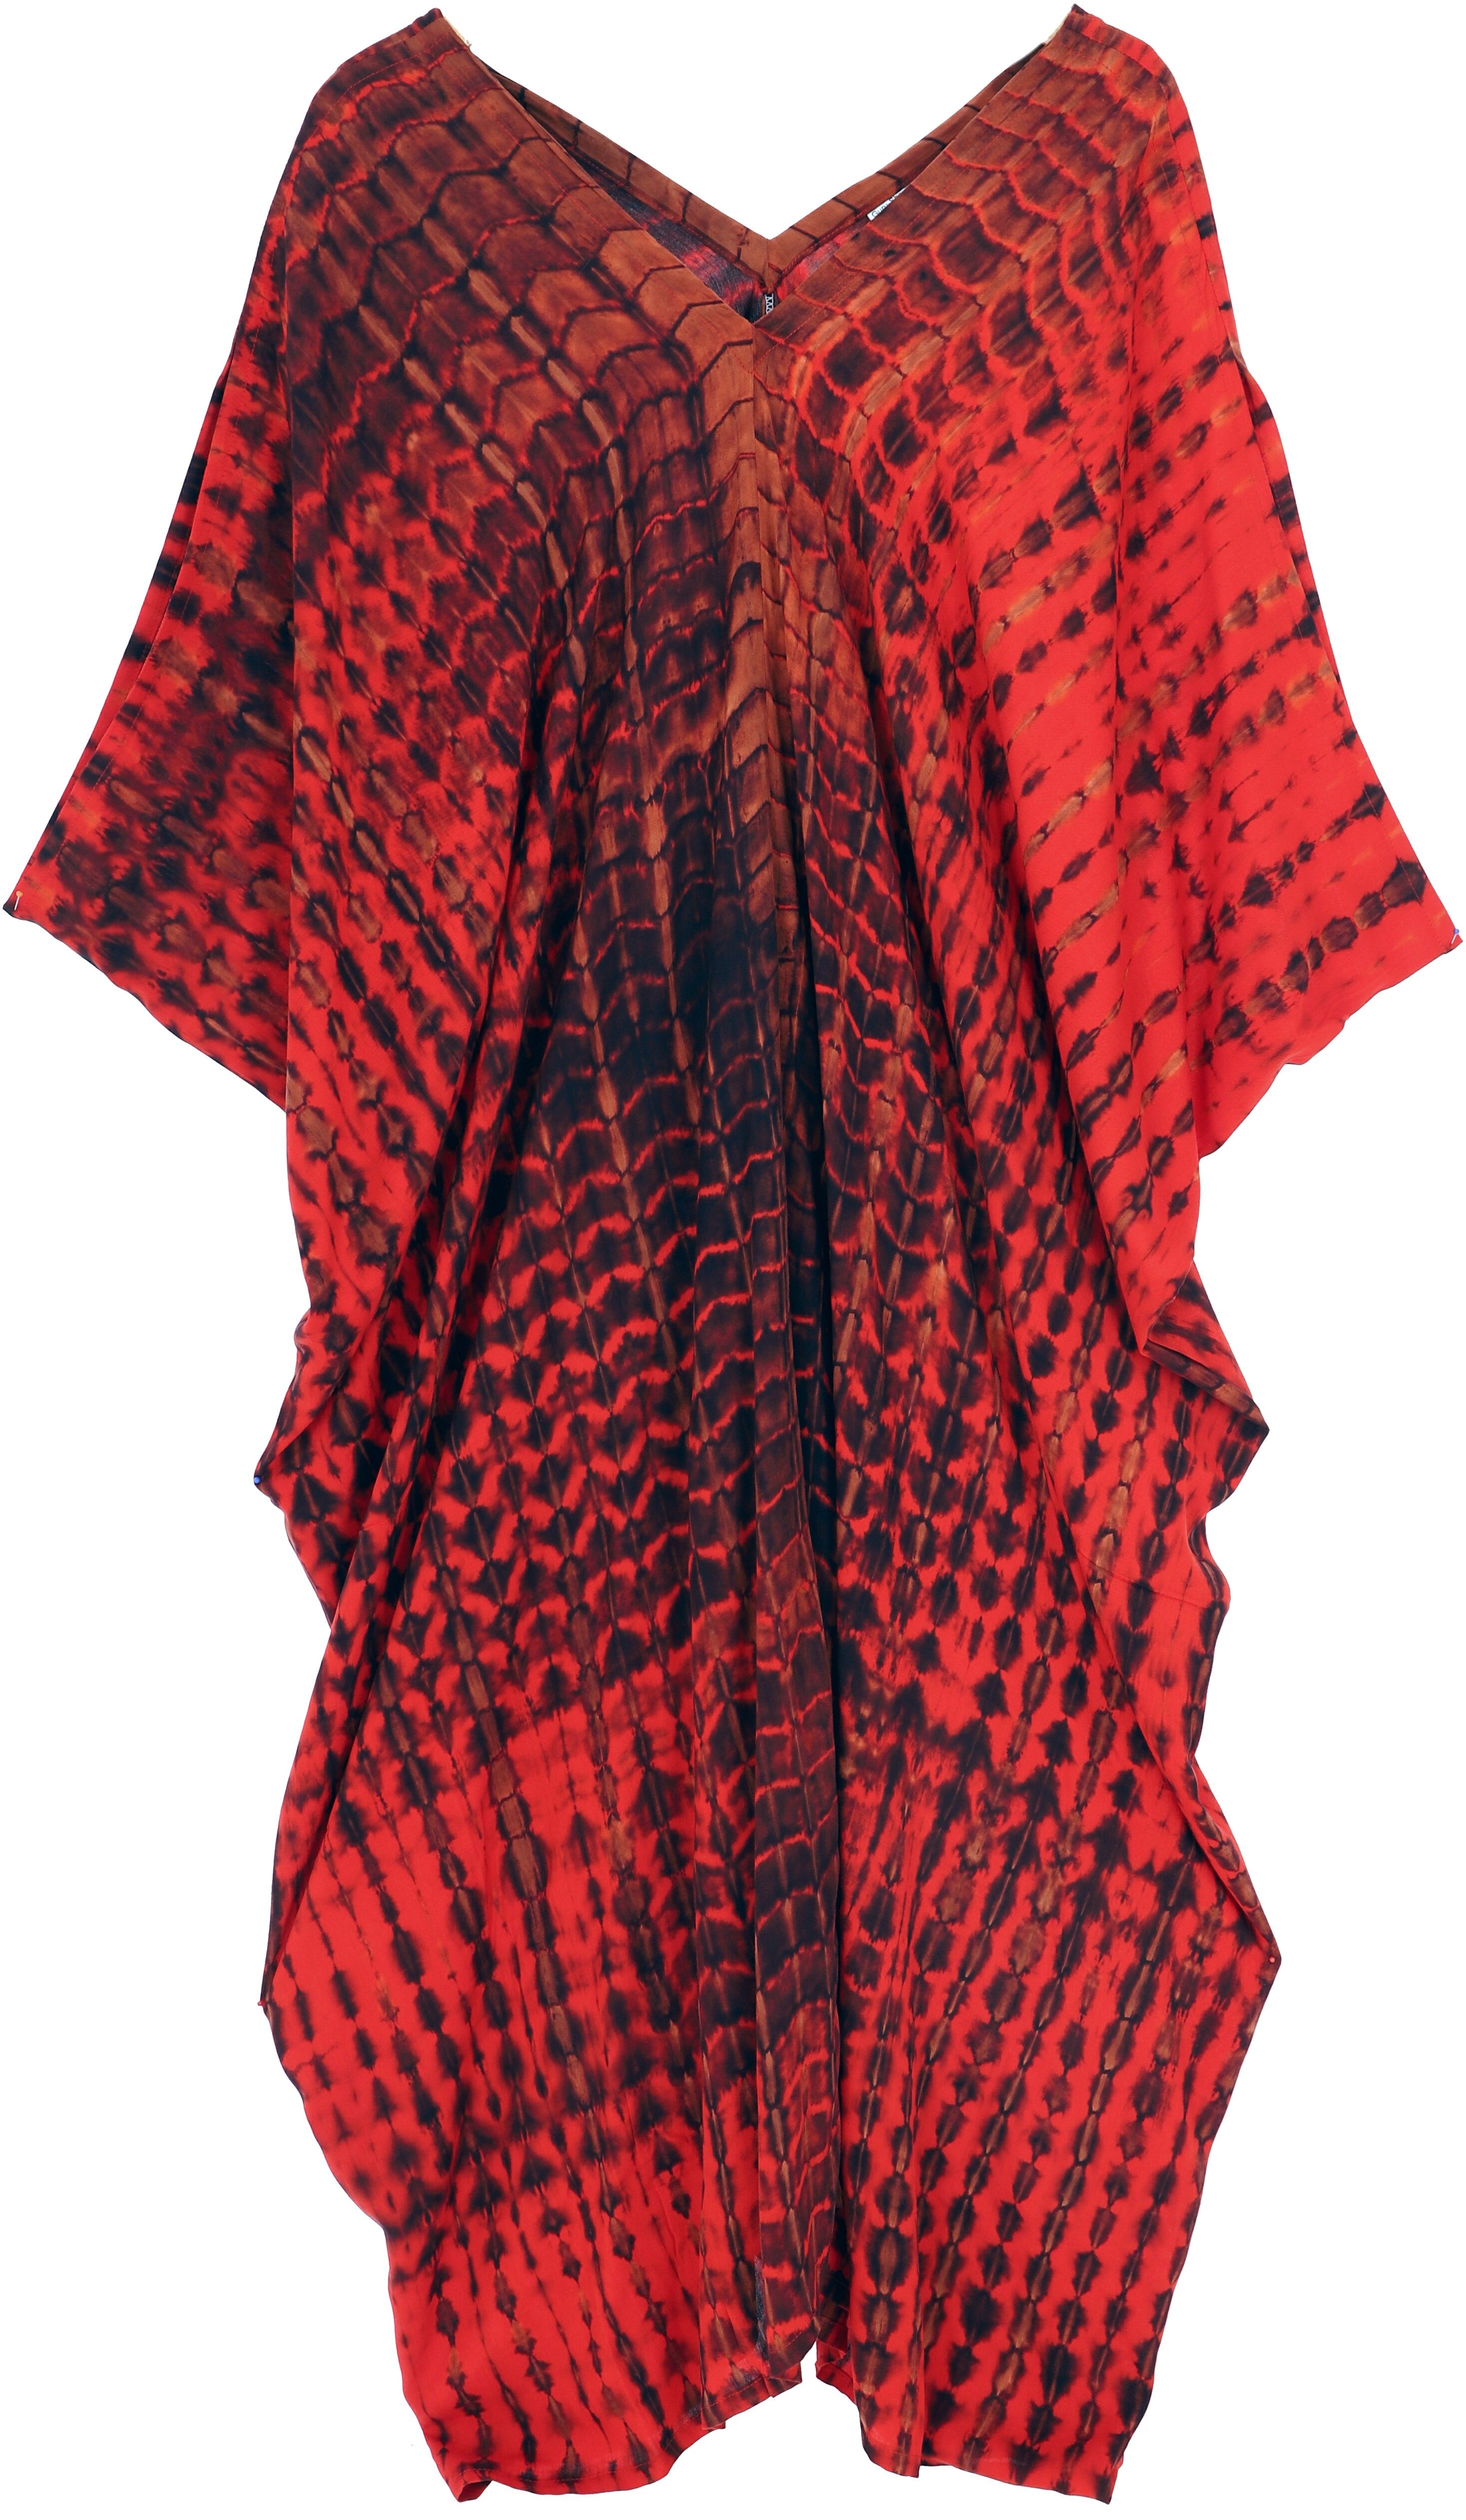 Guru-Shop Midikleid Batikkleid, Batik Kaftan, alternative rot Bekleidung Strandkleid.. oversize